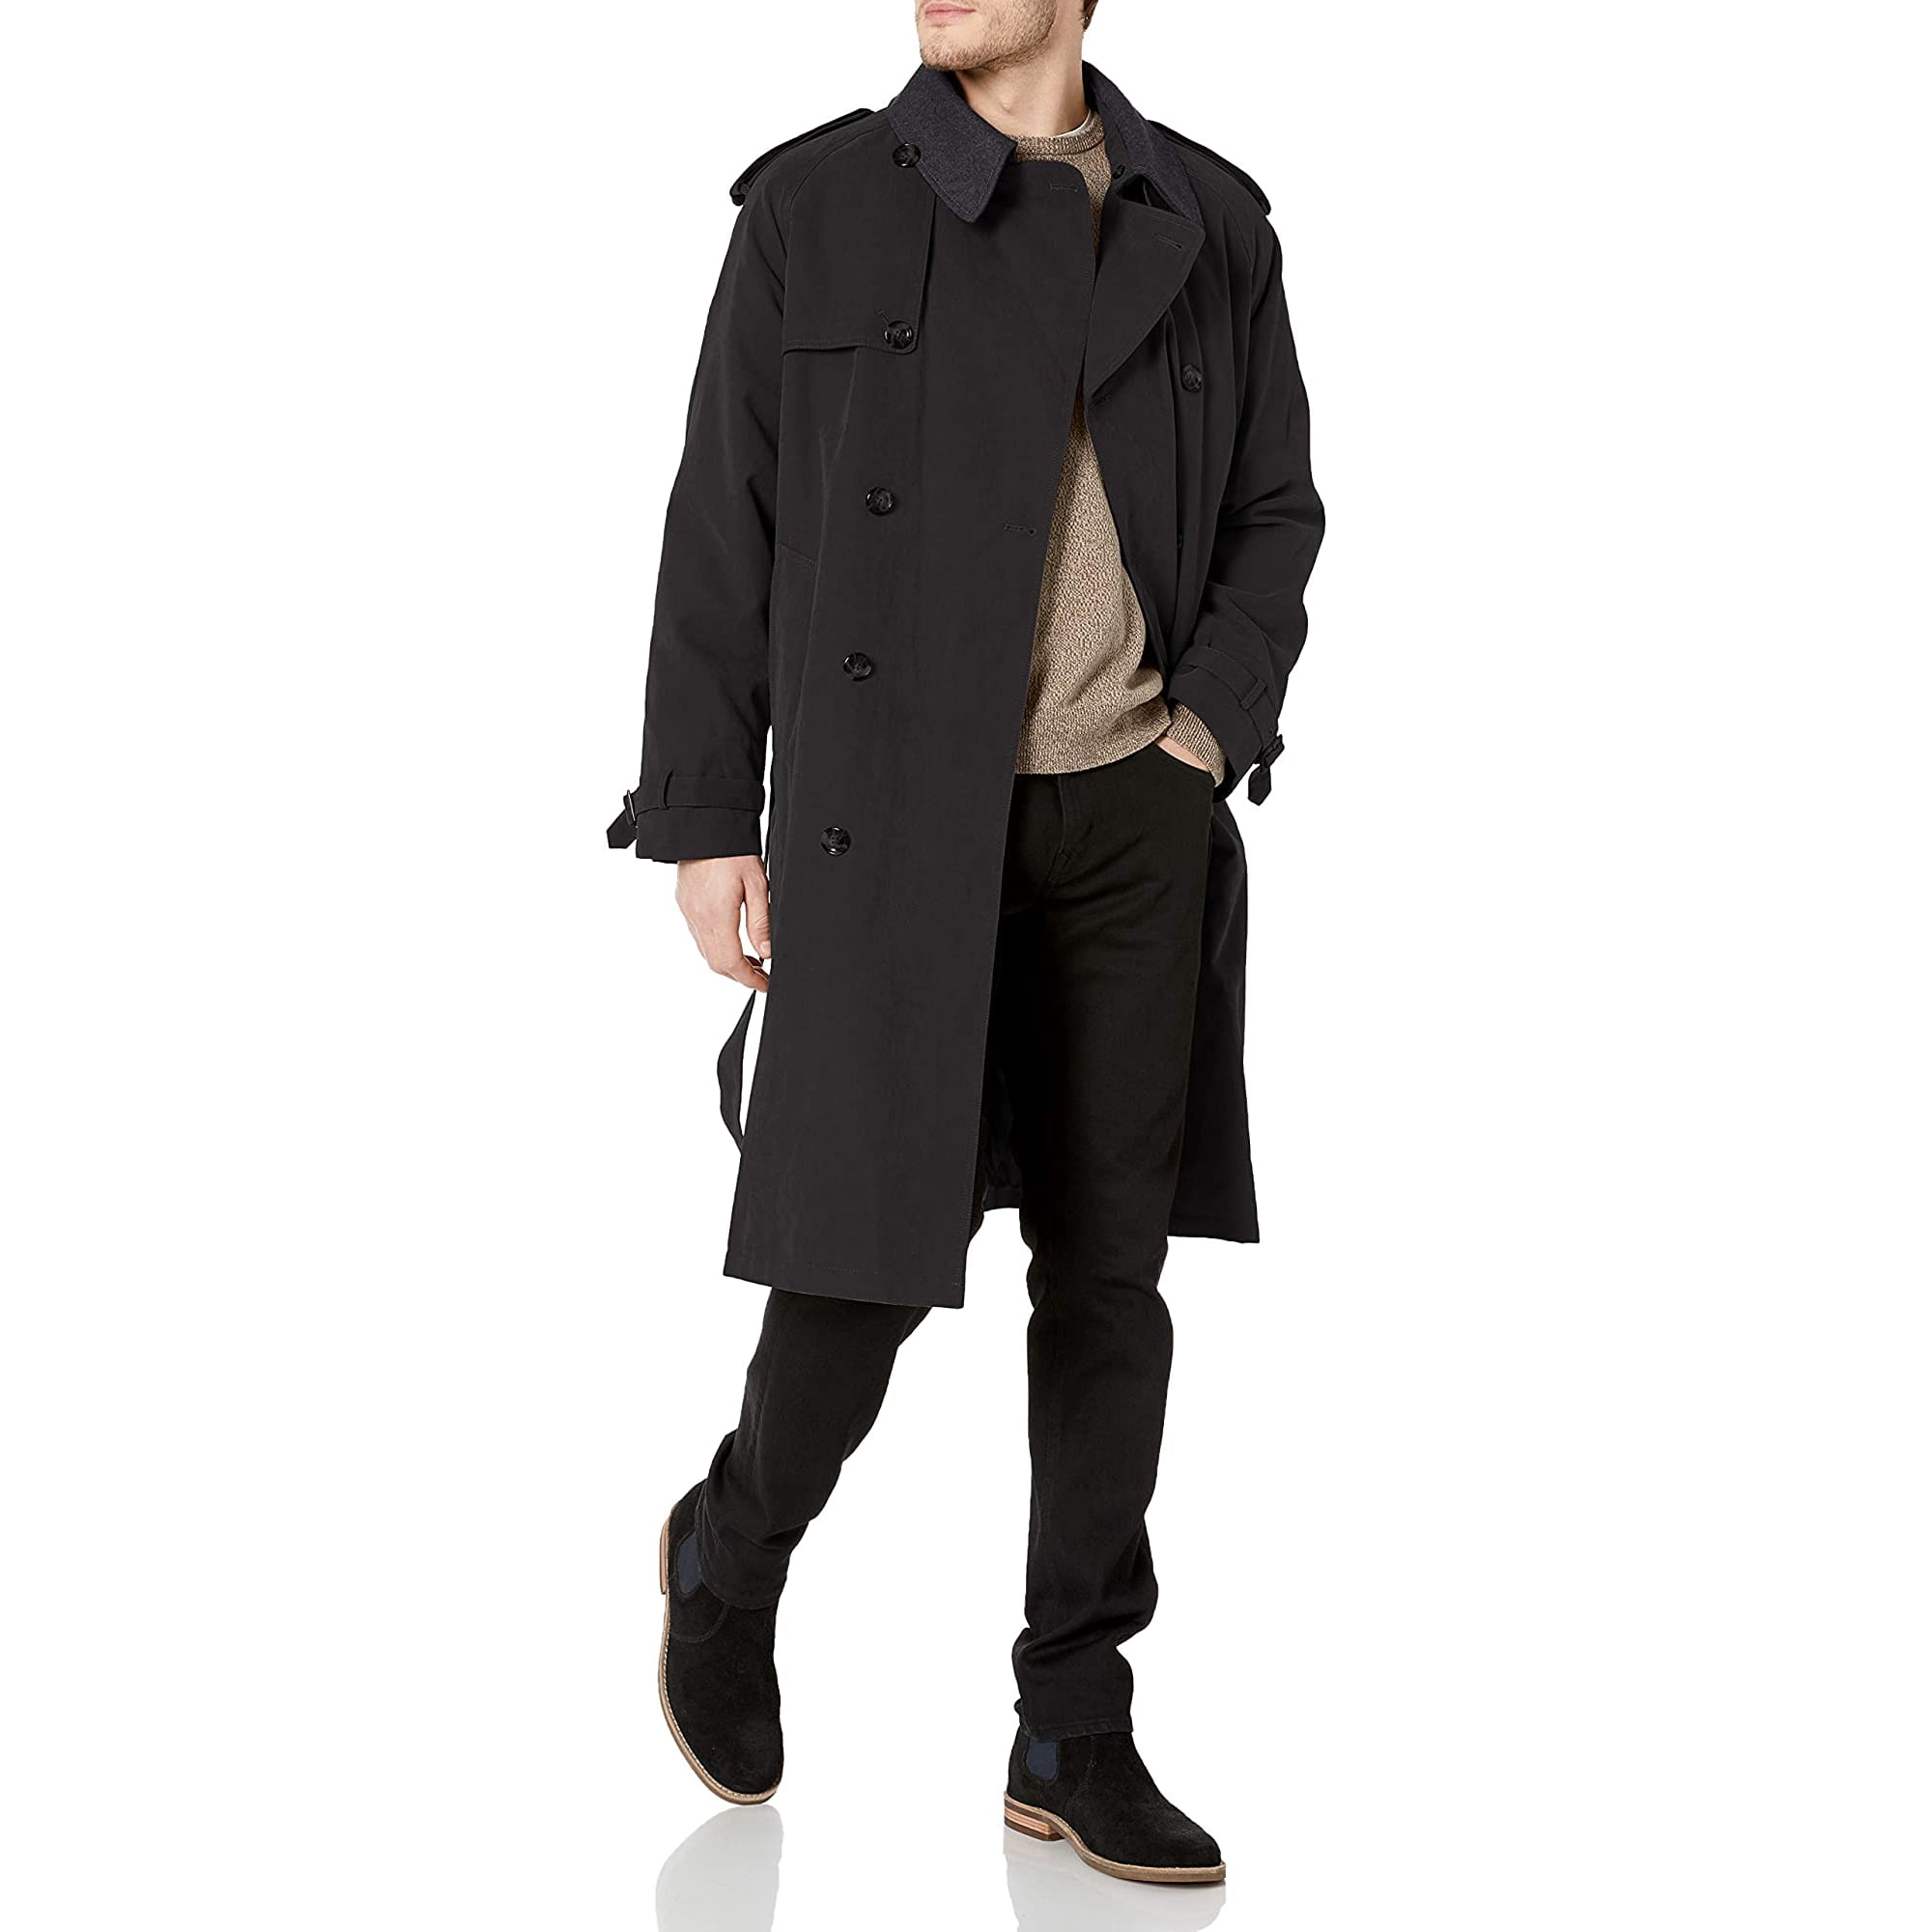 London Fog Wool Jacket. Charcoal Gray - weeklybangalee.com